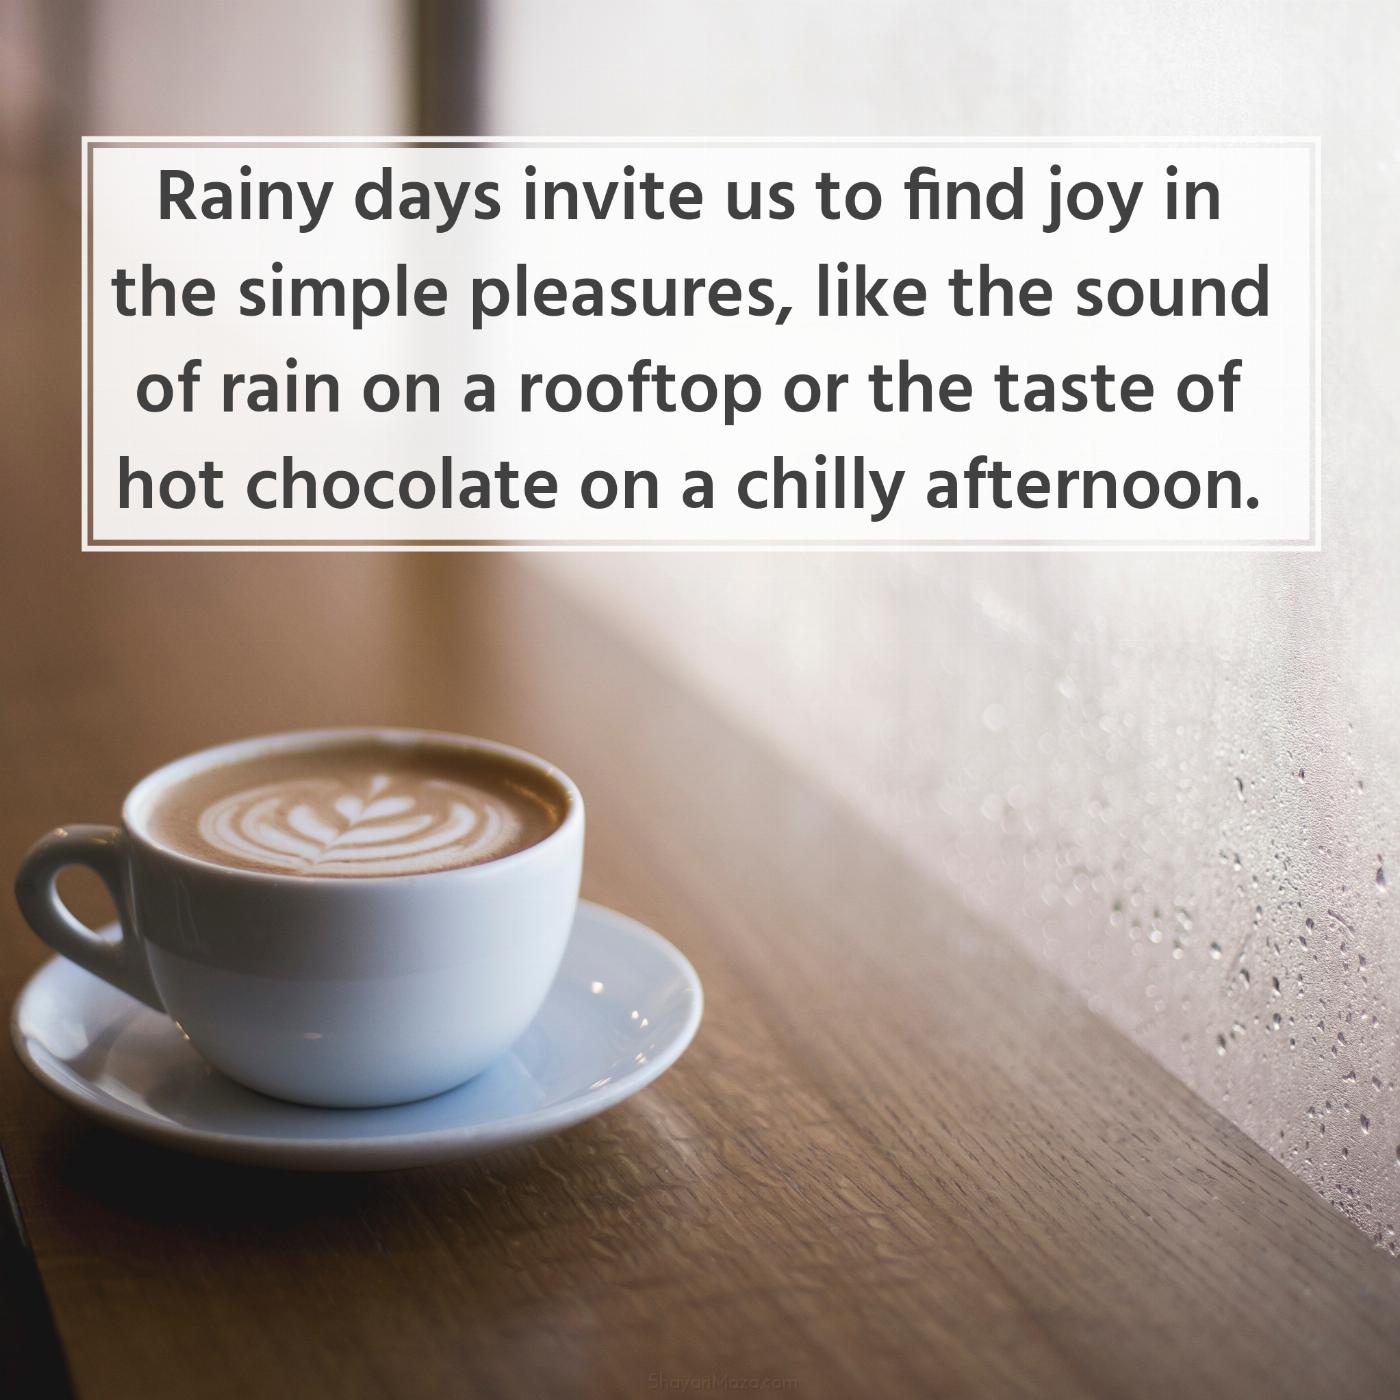 Rainy days invite us to find joy in the simple pleasures